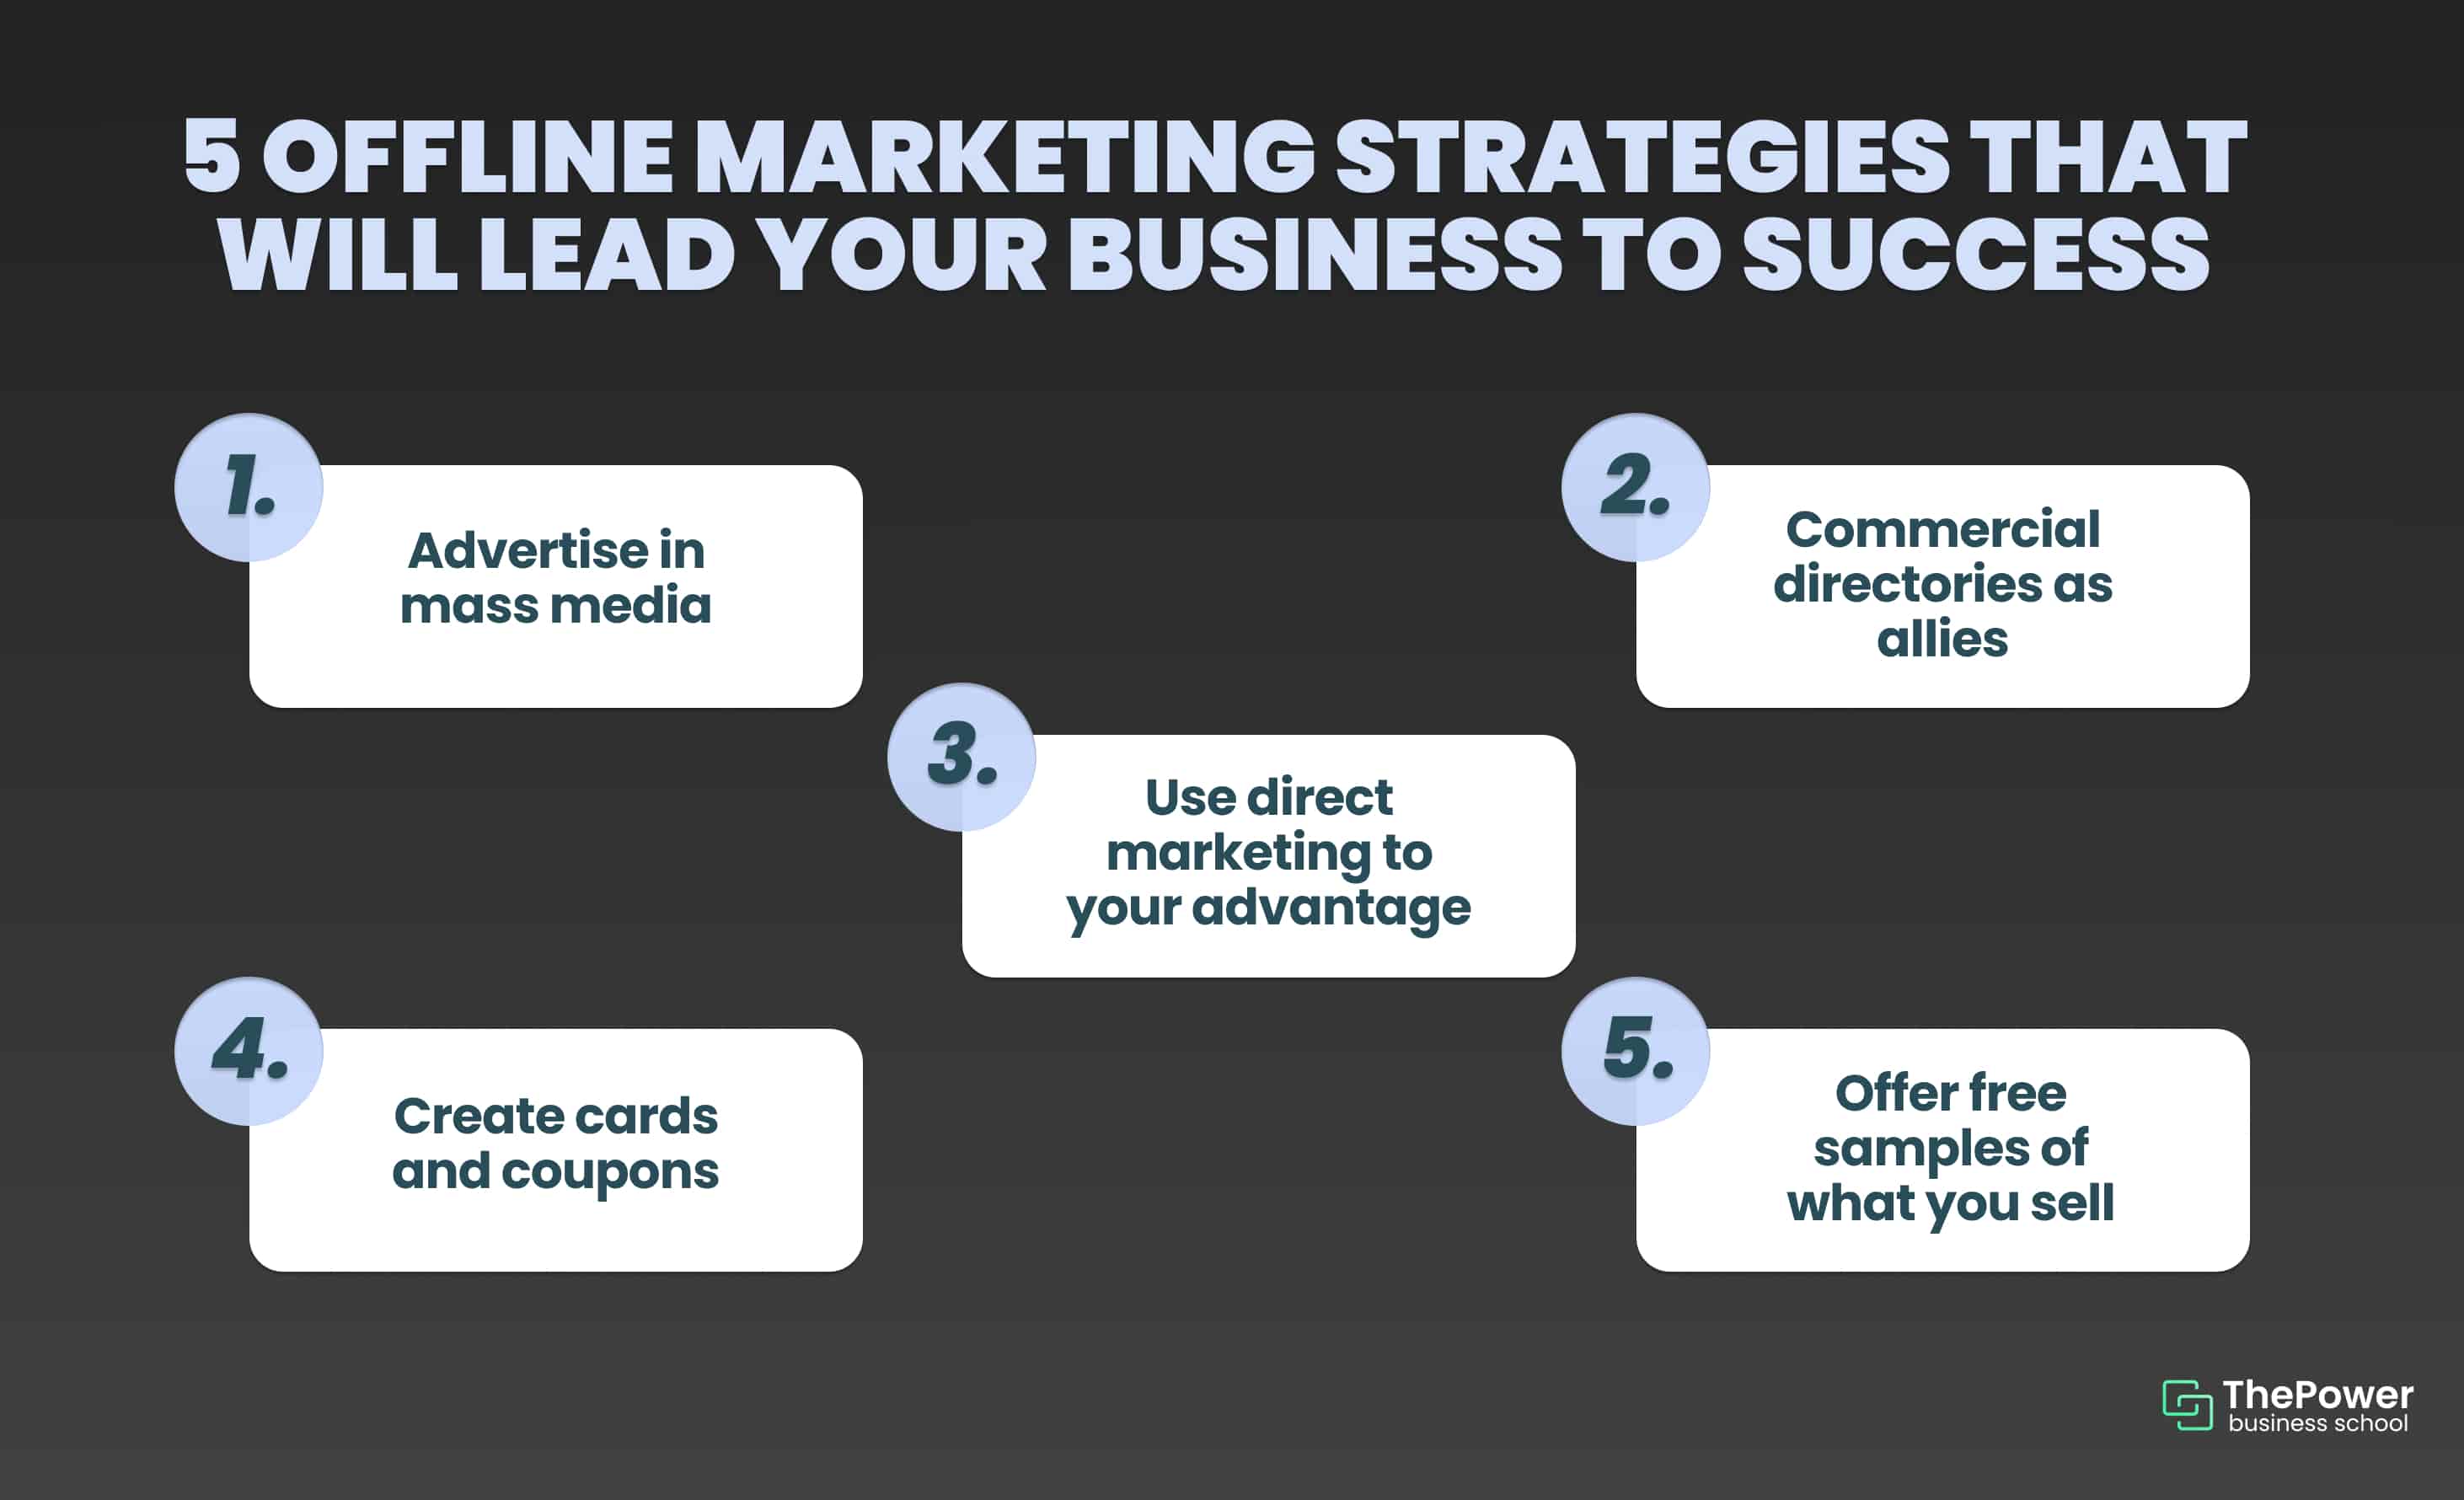 Offline Marketing strategies